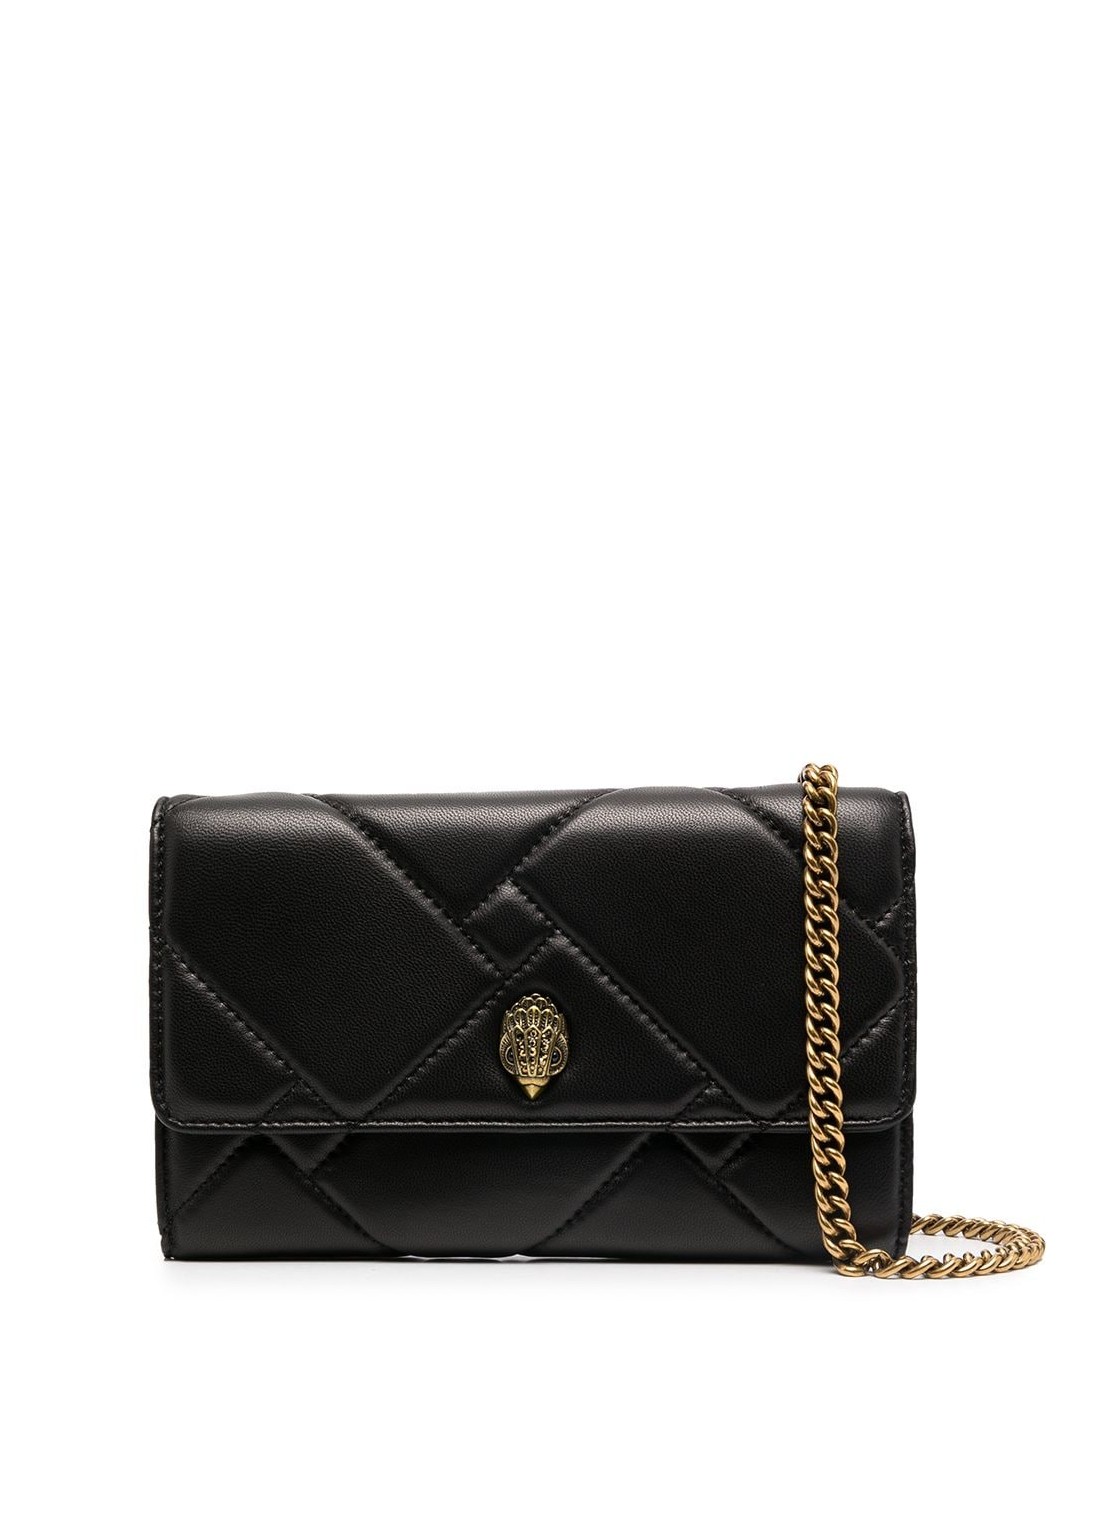 Handbag kurt geiger handbag woman leather mini kensington 0846369719 69 talla T/U
 